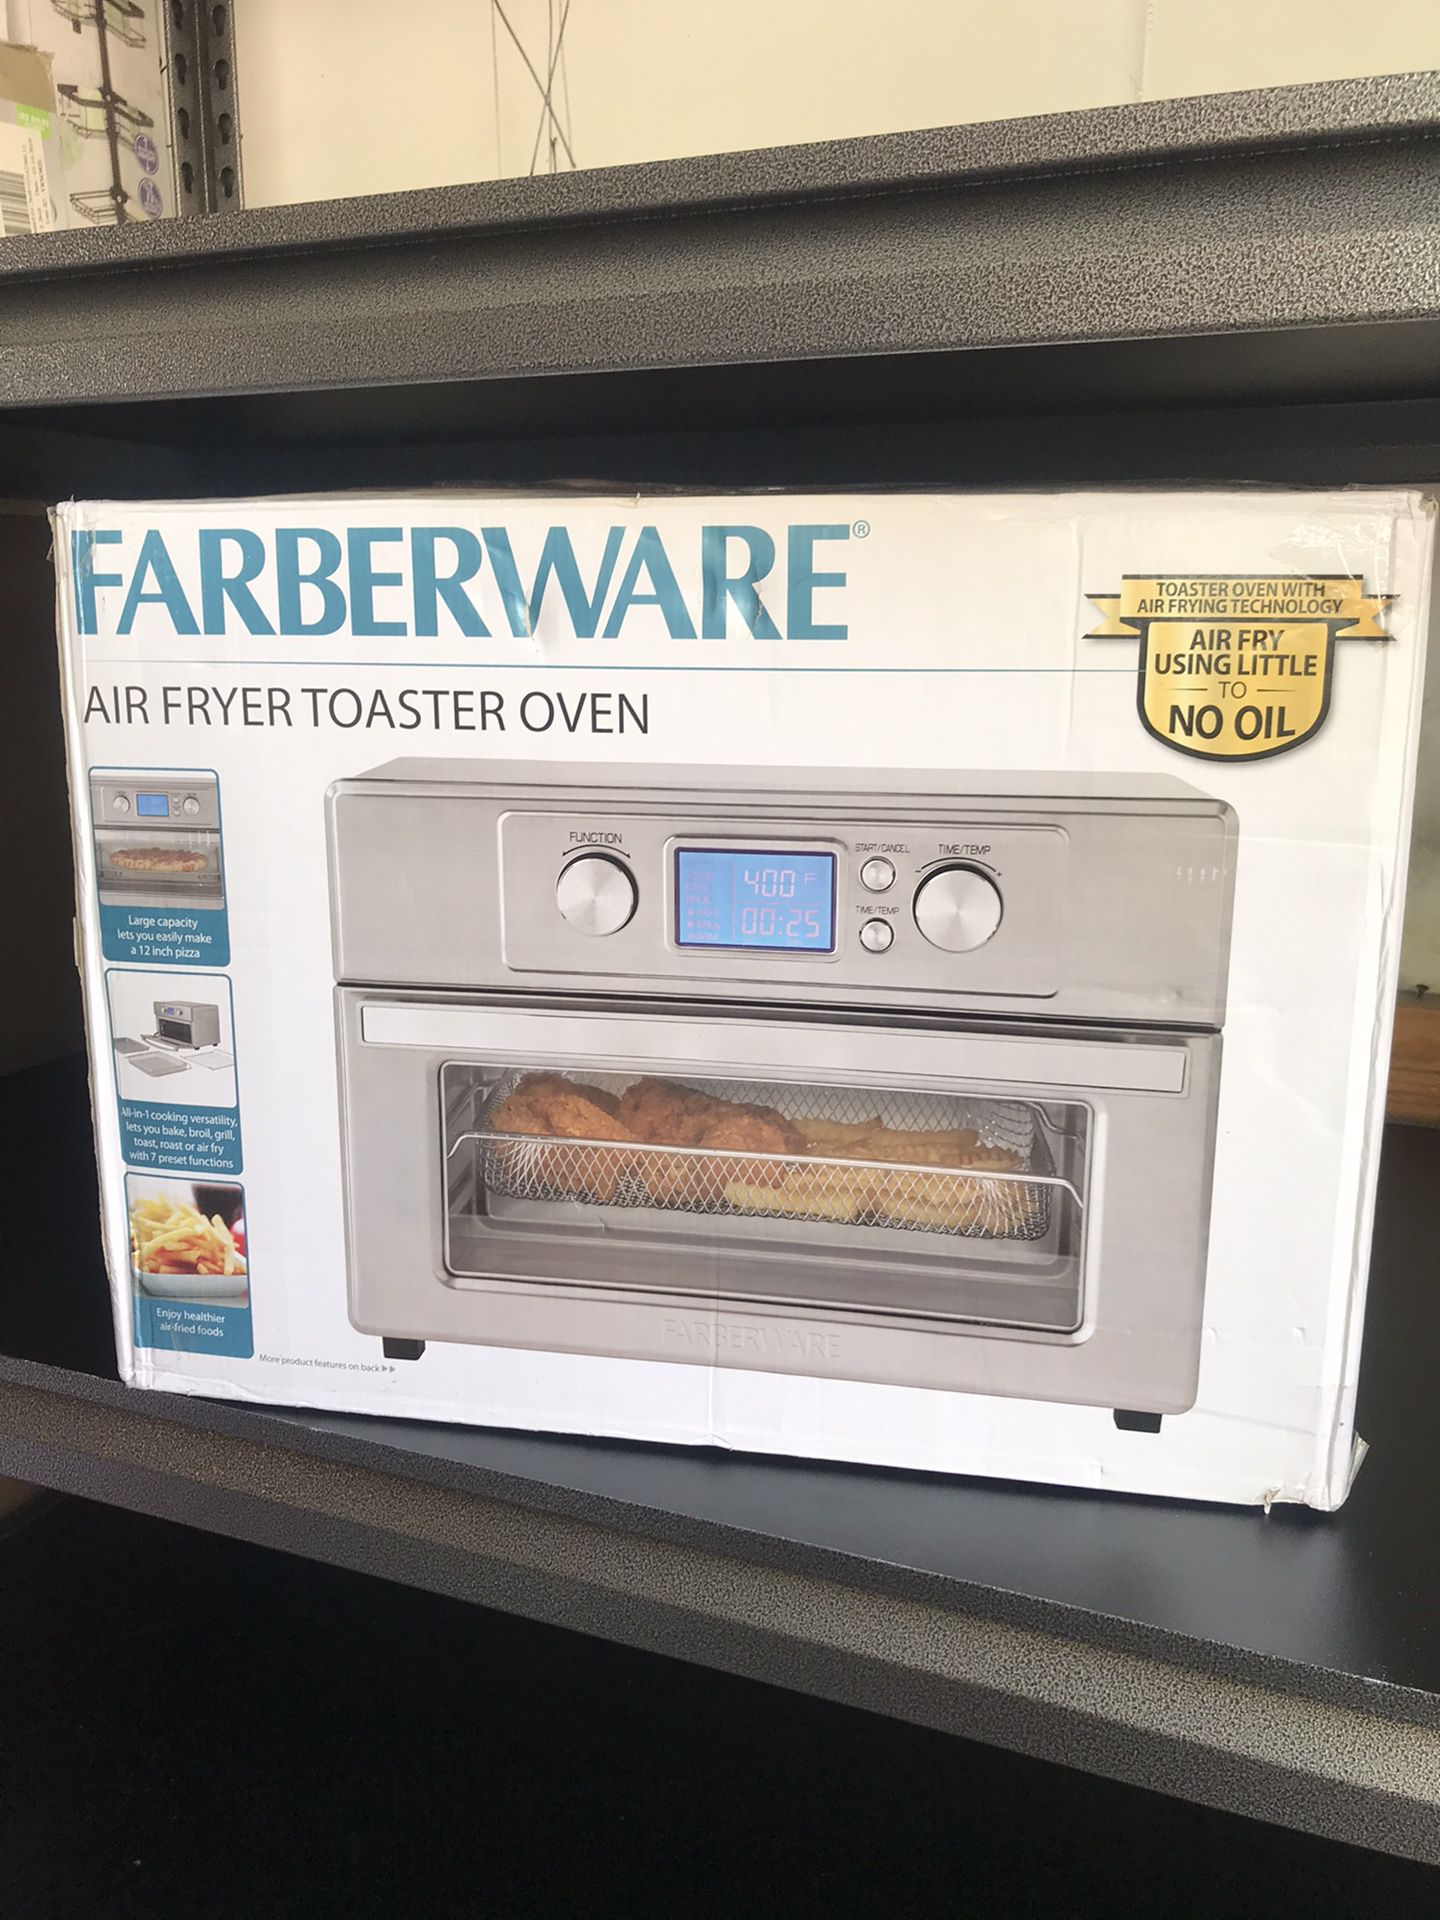 Farberware air fryer toaster oven